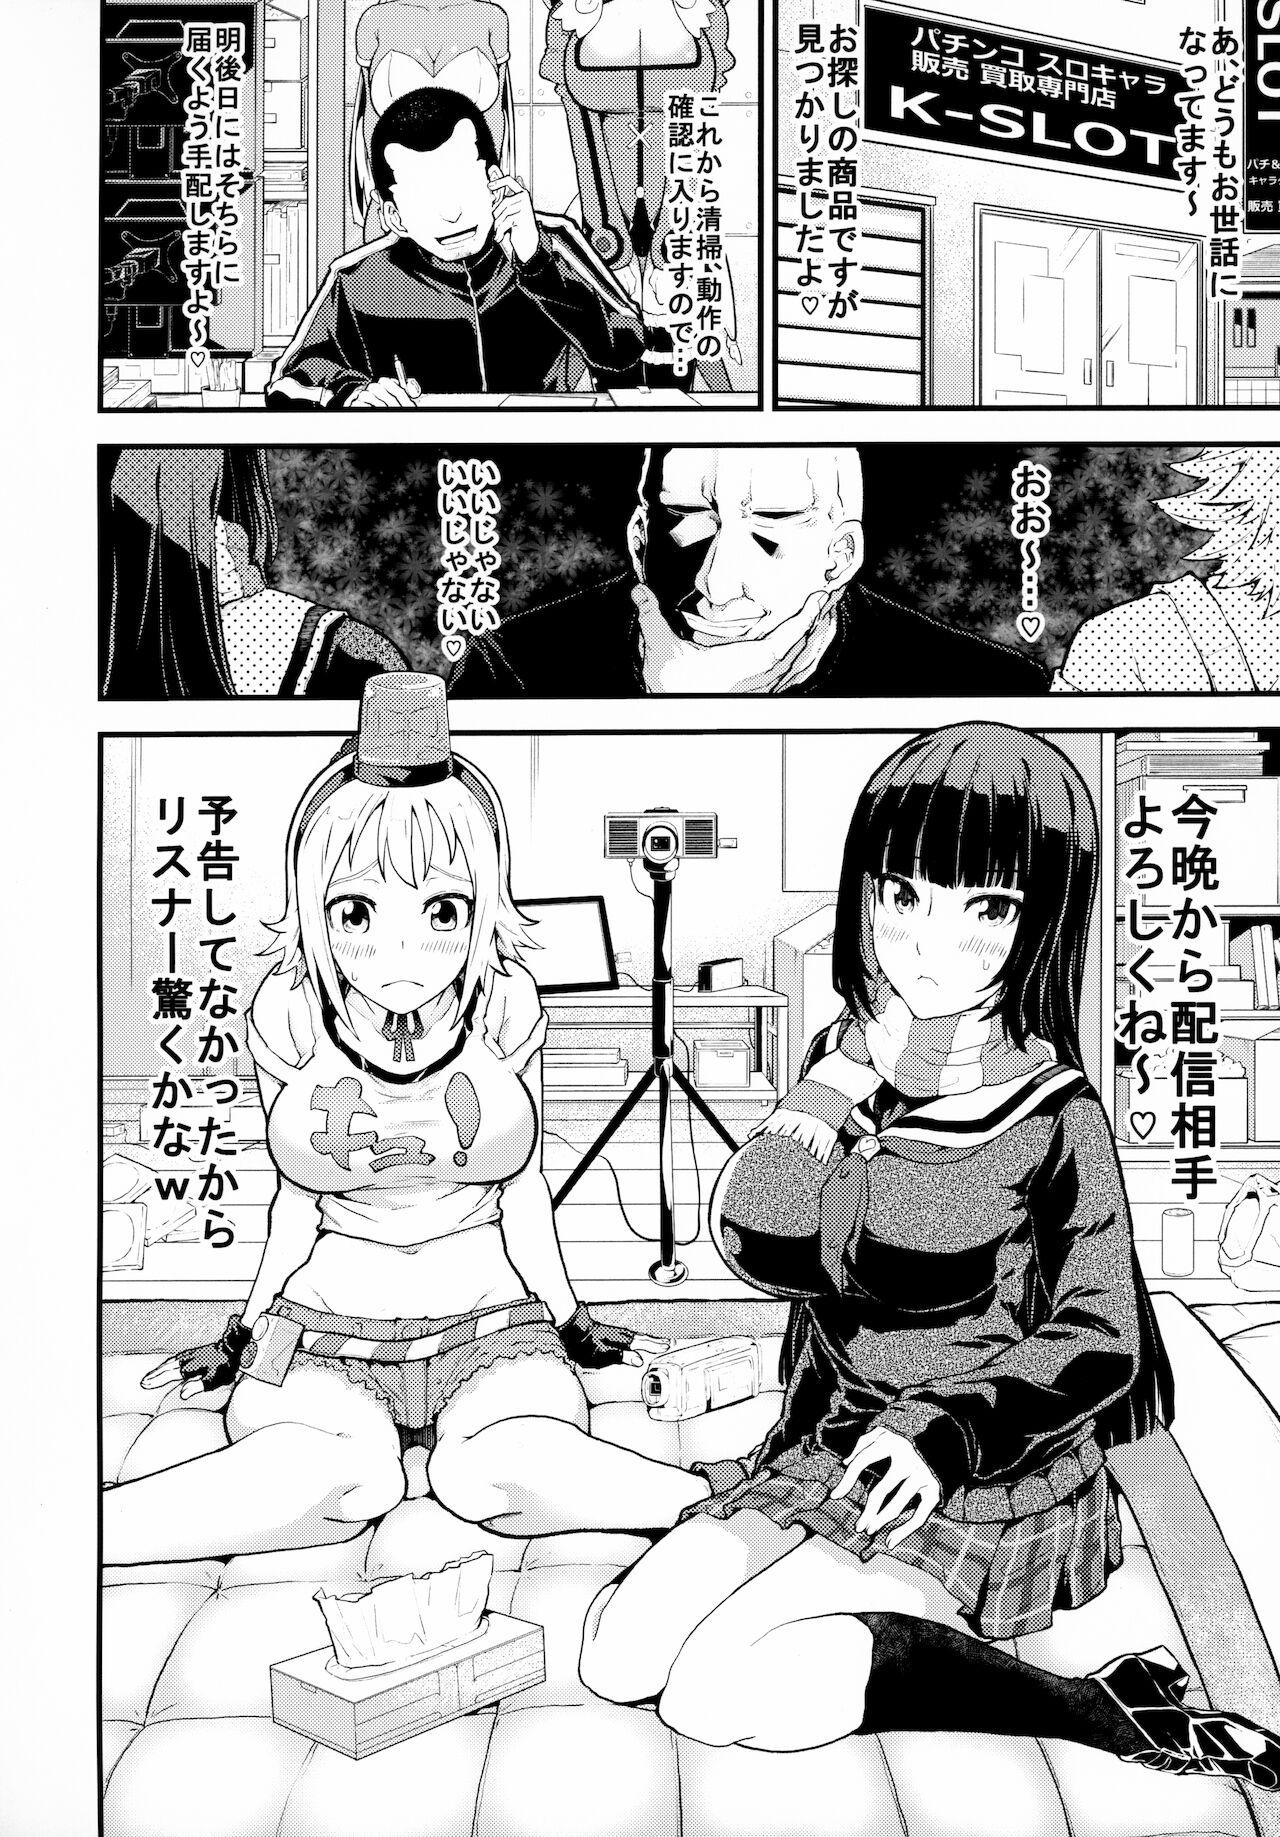 Body SloChara Jissen Namahaishin - Mahjong monogatari Sologirl - Page 7